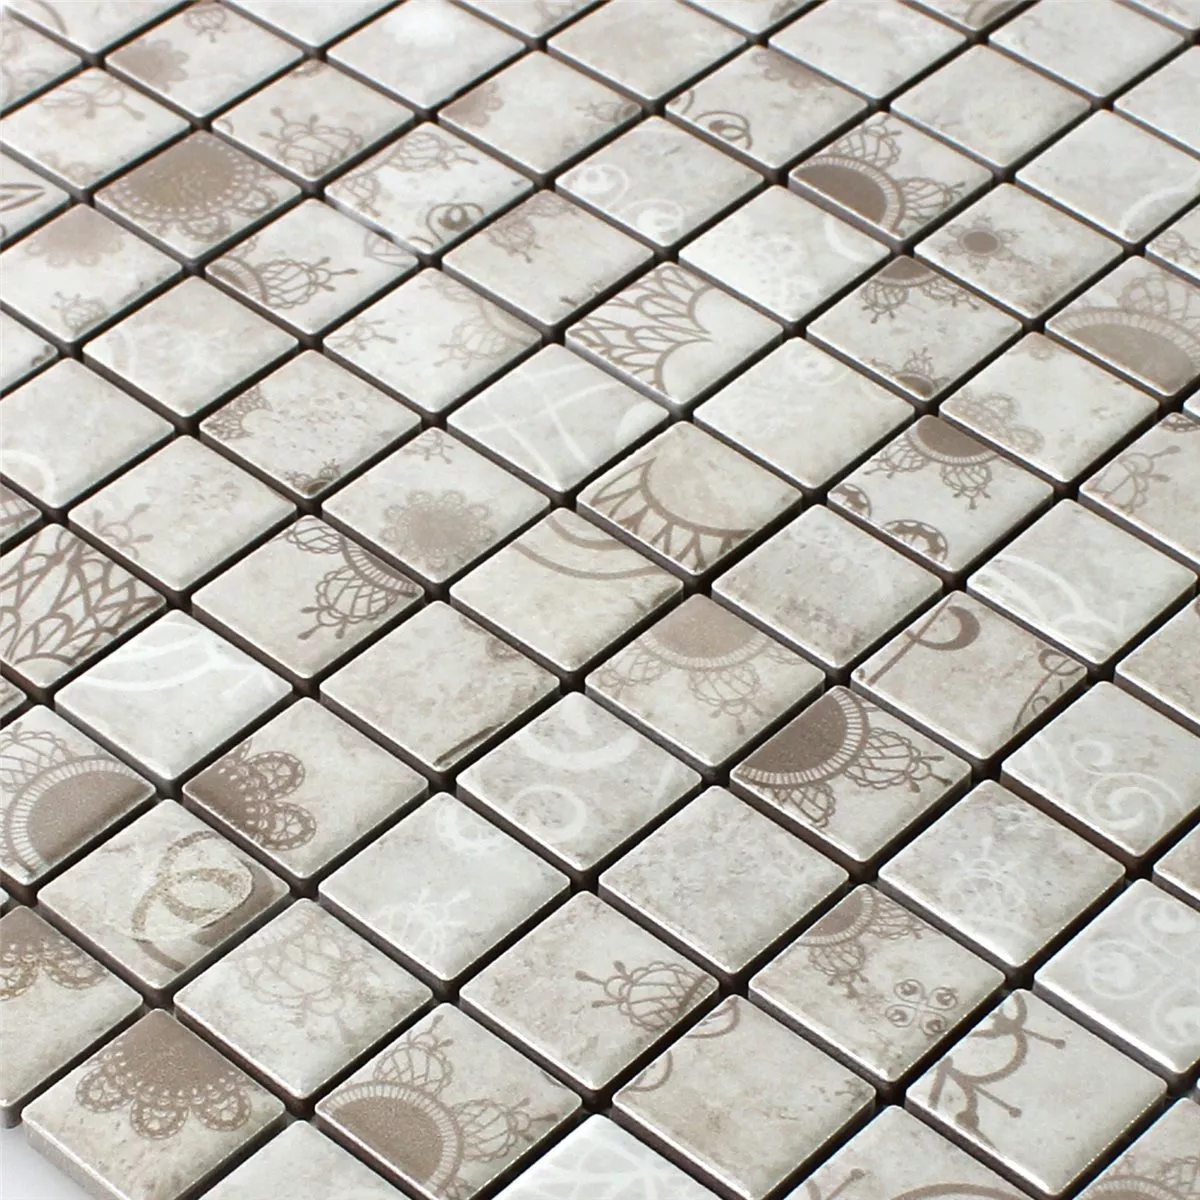 Sample Mosaic Tiles Ceramic Laceo Grey